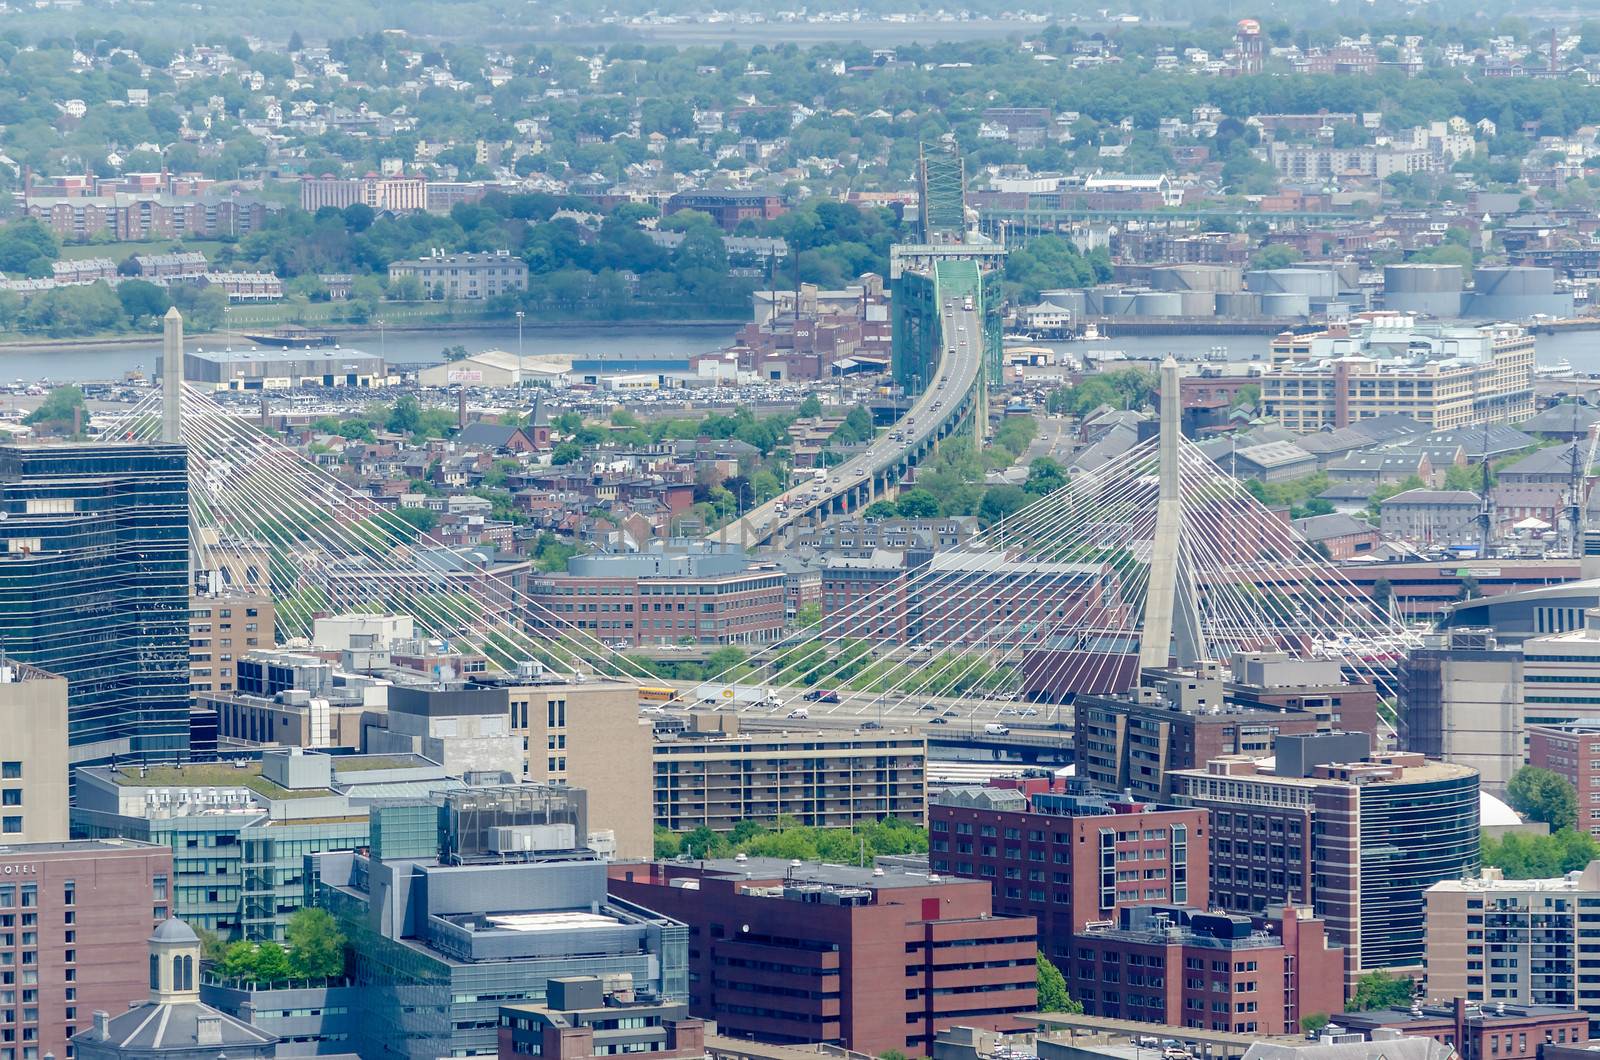 Aerial View of Central Boston by marcorubino